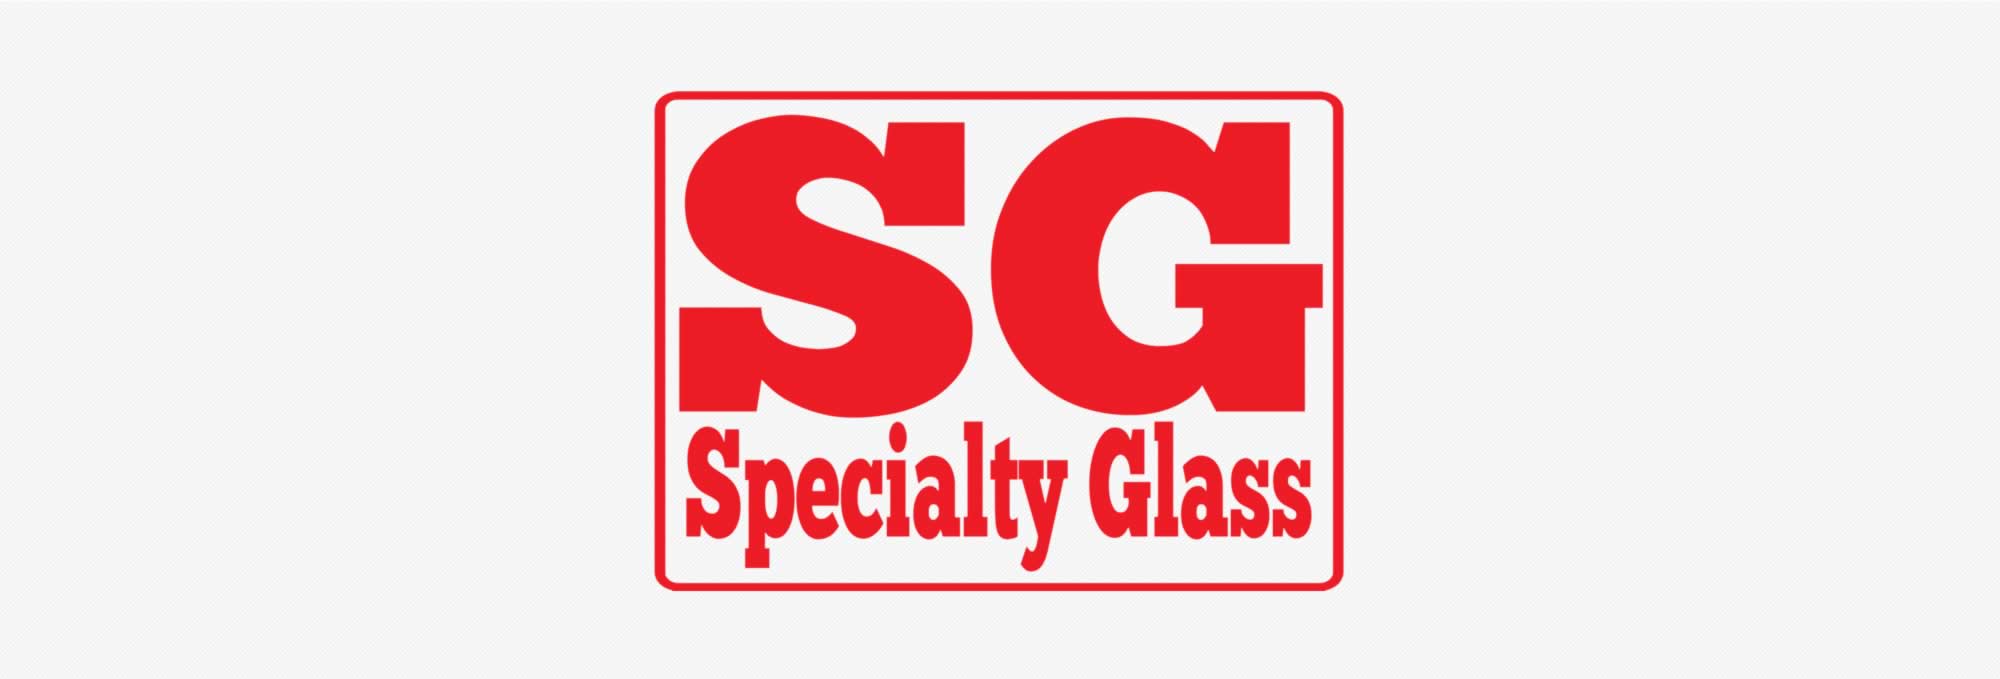 Specialty Glass